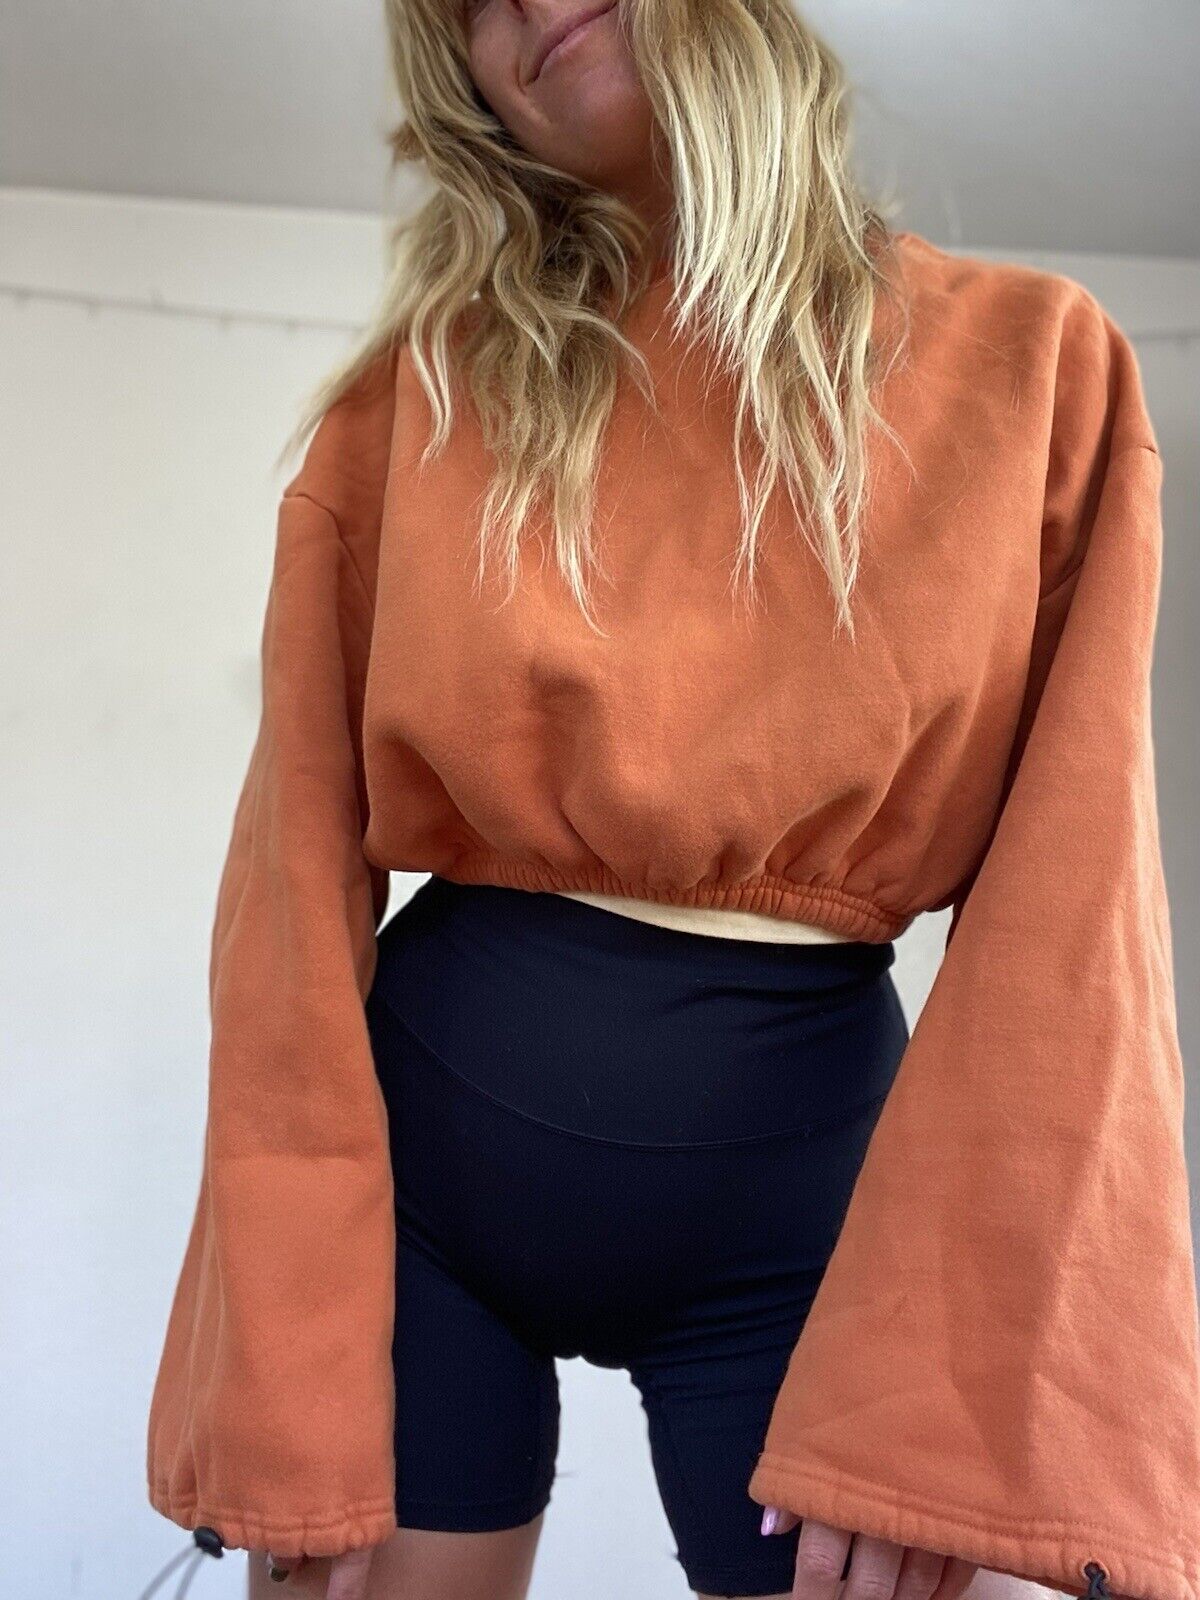 Orange Puffy Sweatshirt - Unbranded - Size Small